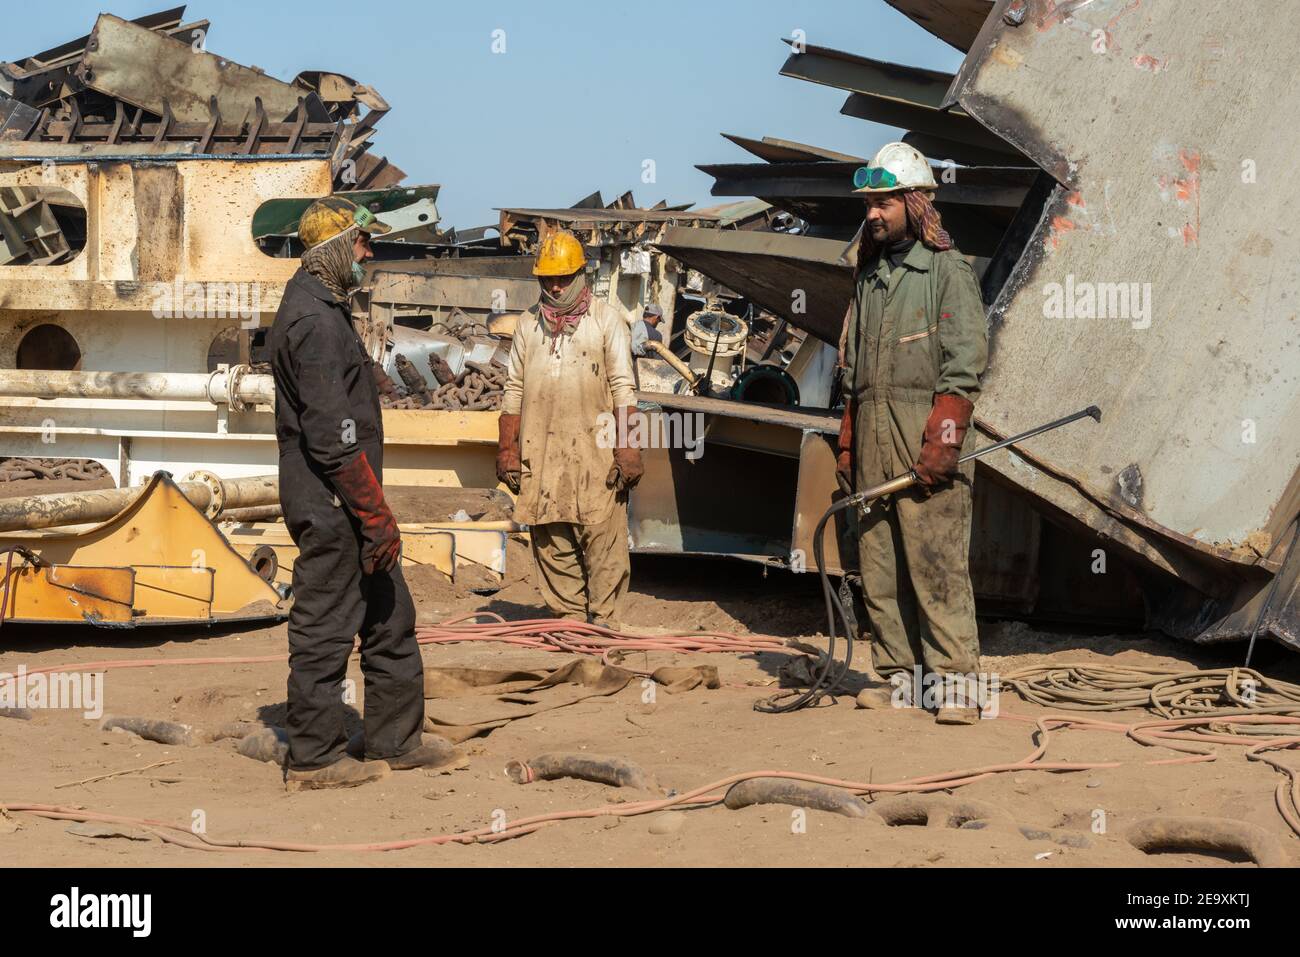 Workers breaking up ships, Gadani ship-breaking yard, located across a 10 km long beachfront, Balochistan, Pakistan. Stock Photo